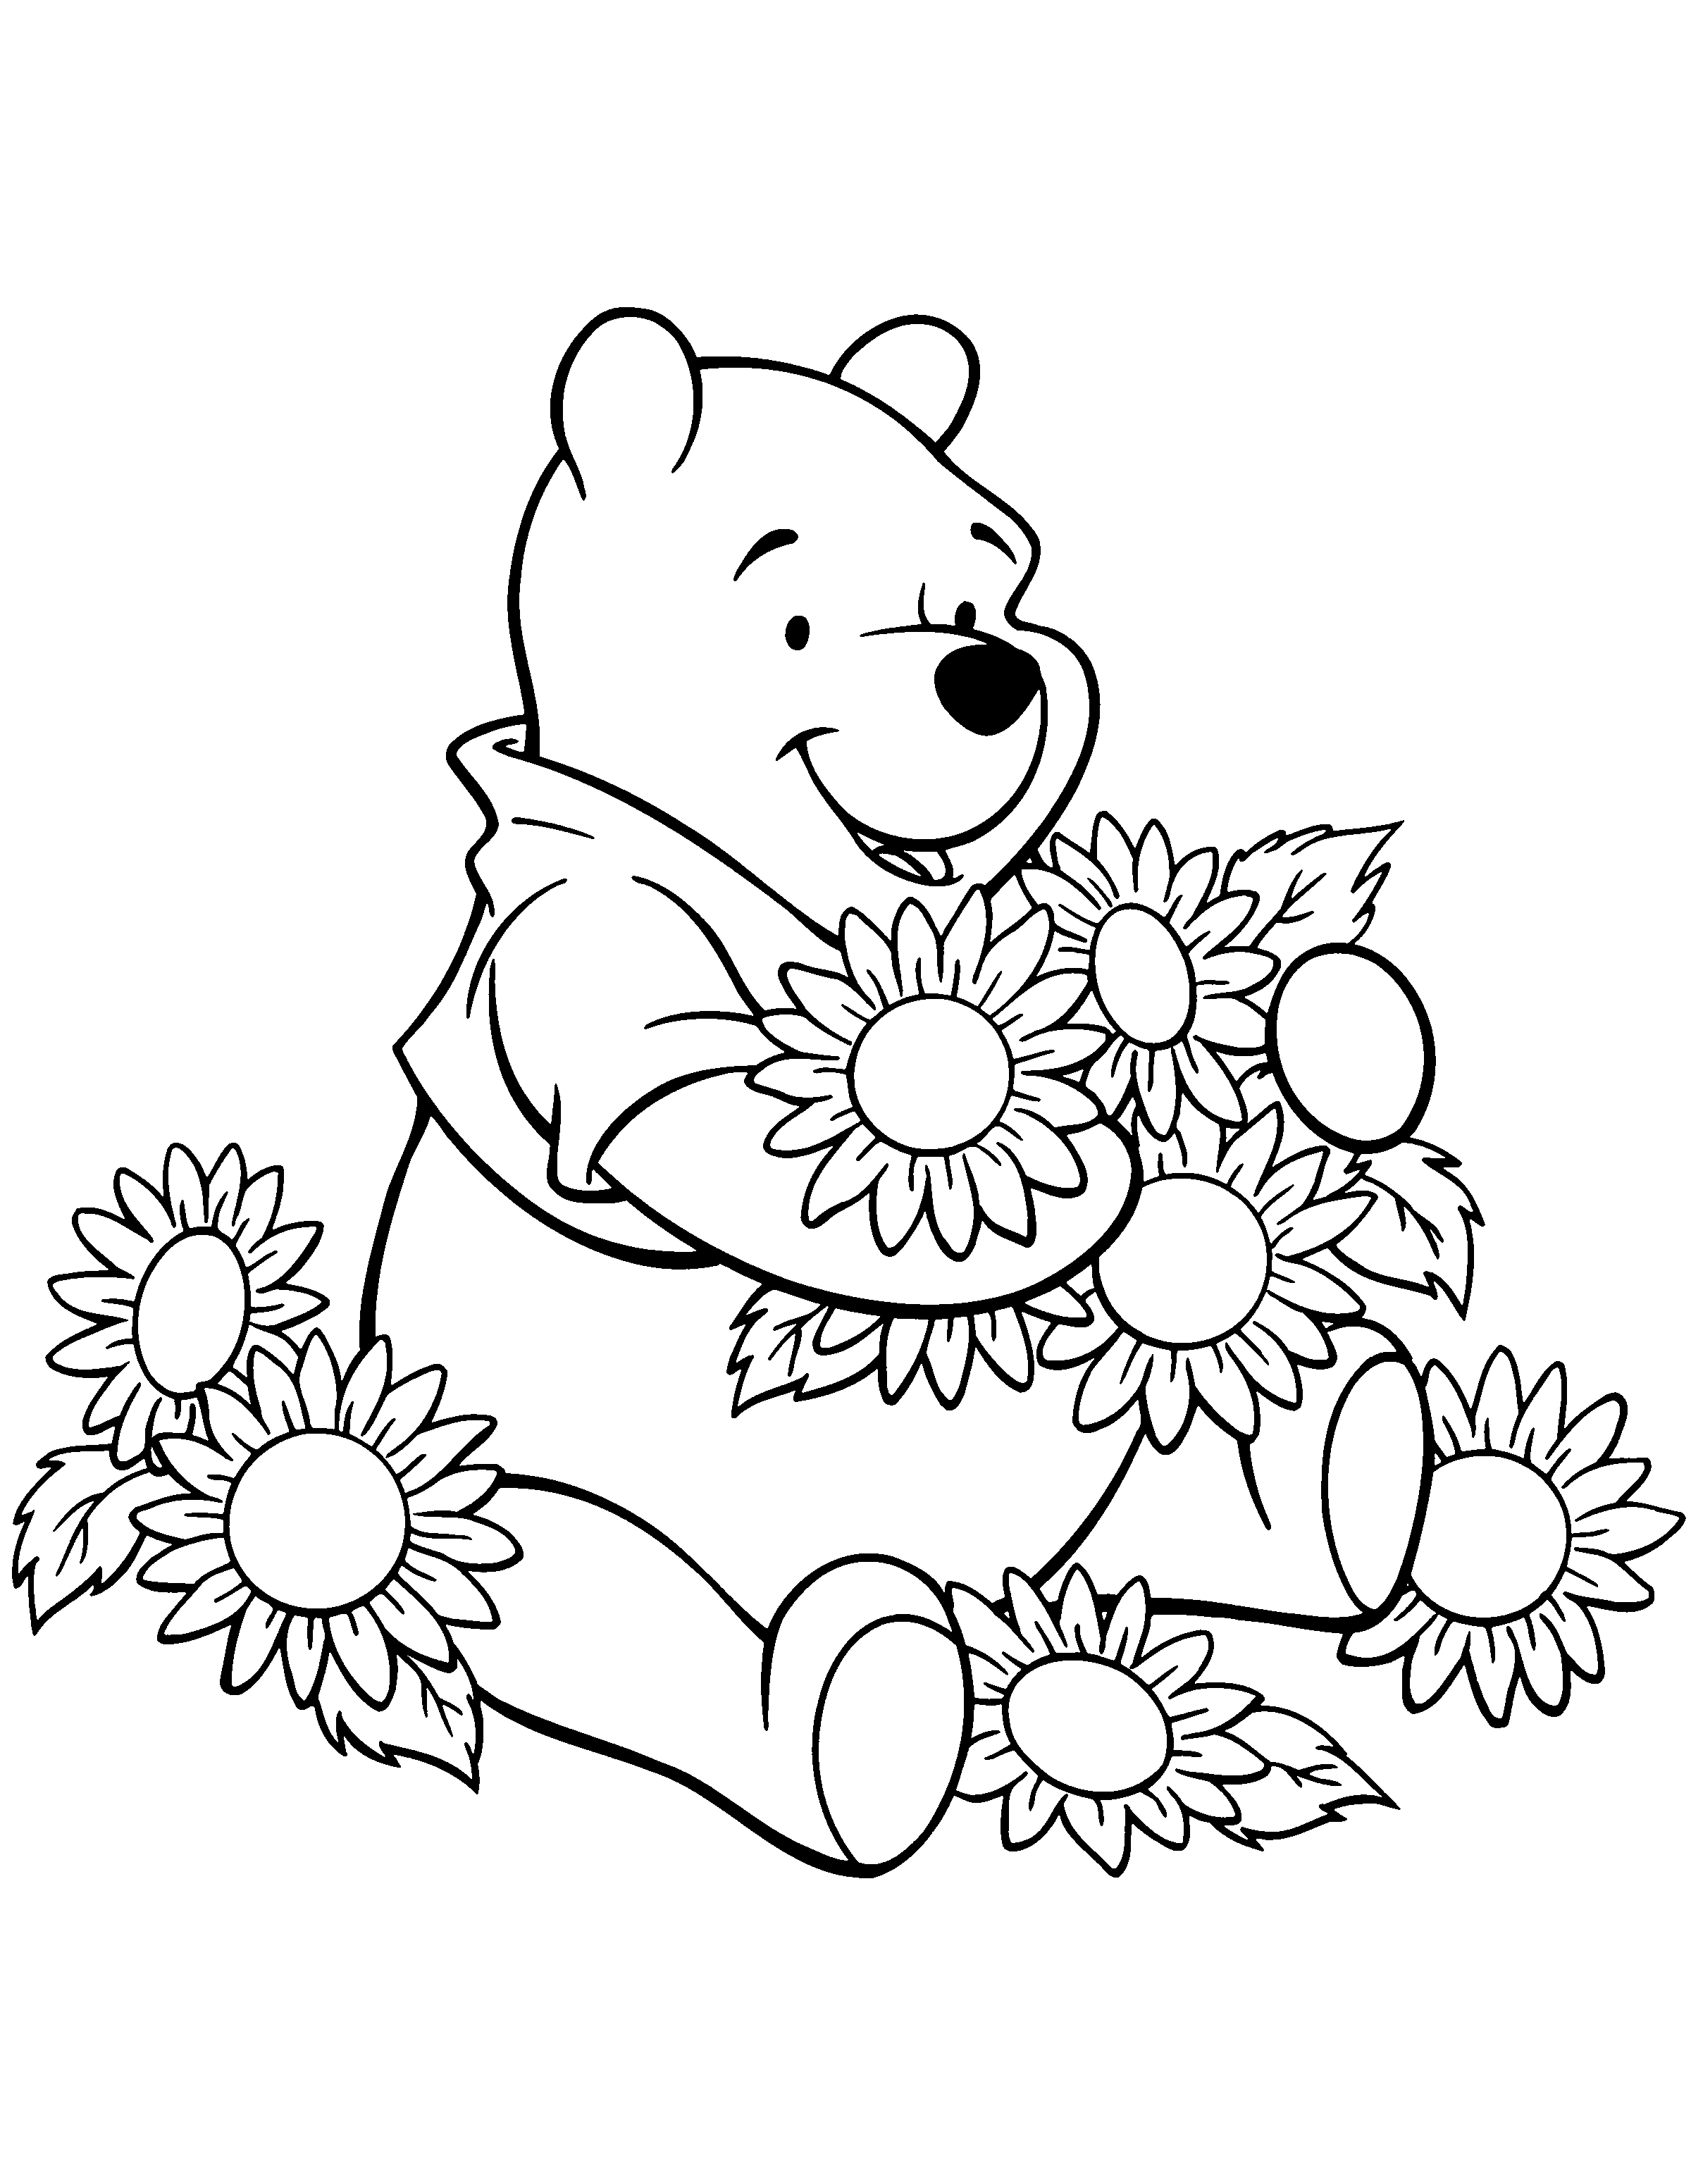 dibujo-para-colorear-winnie-the-pooh-imagen-animada-0102